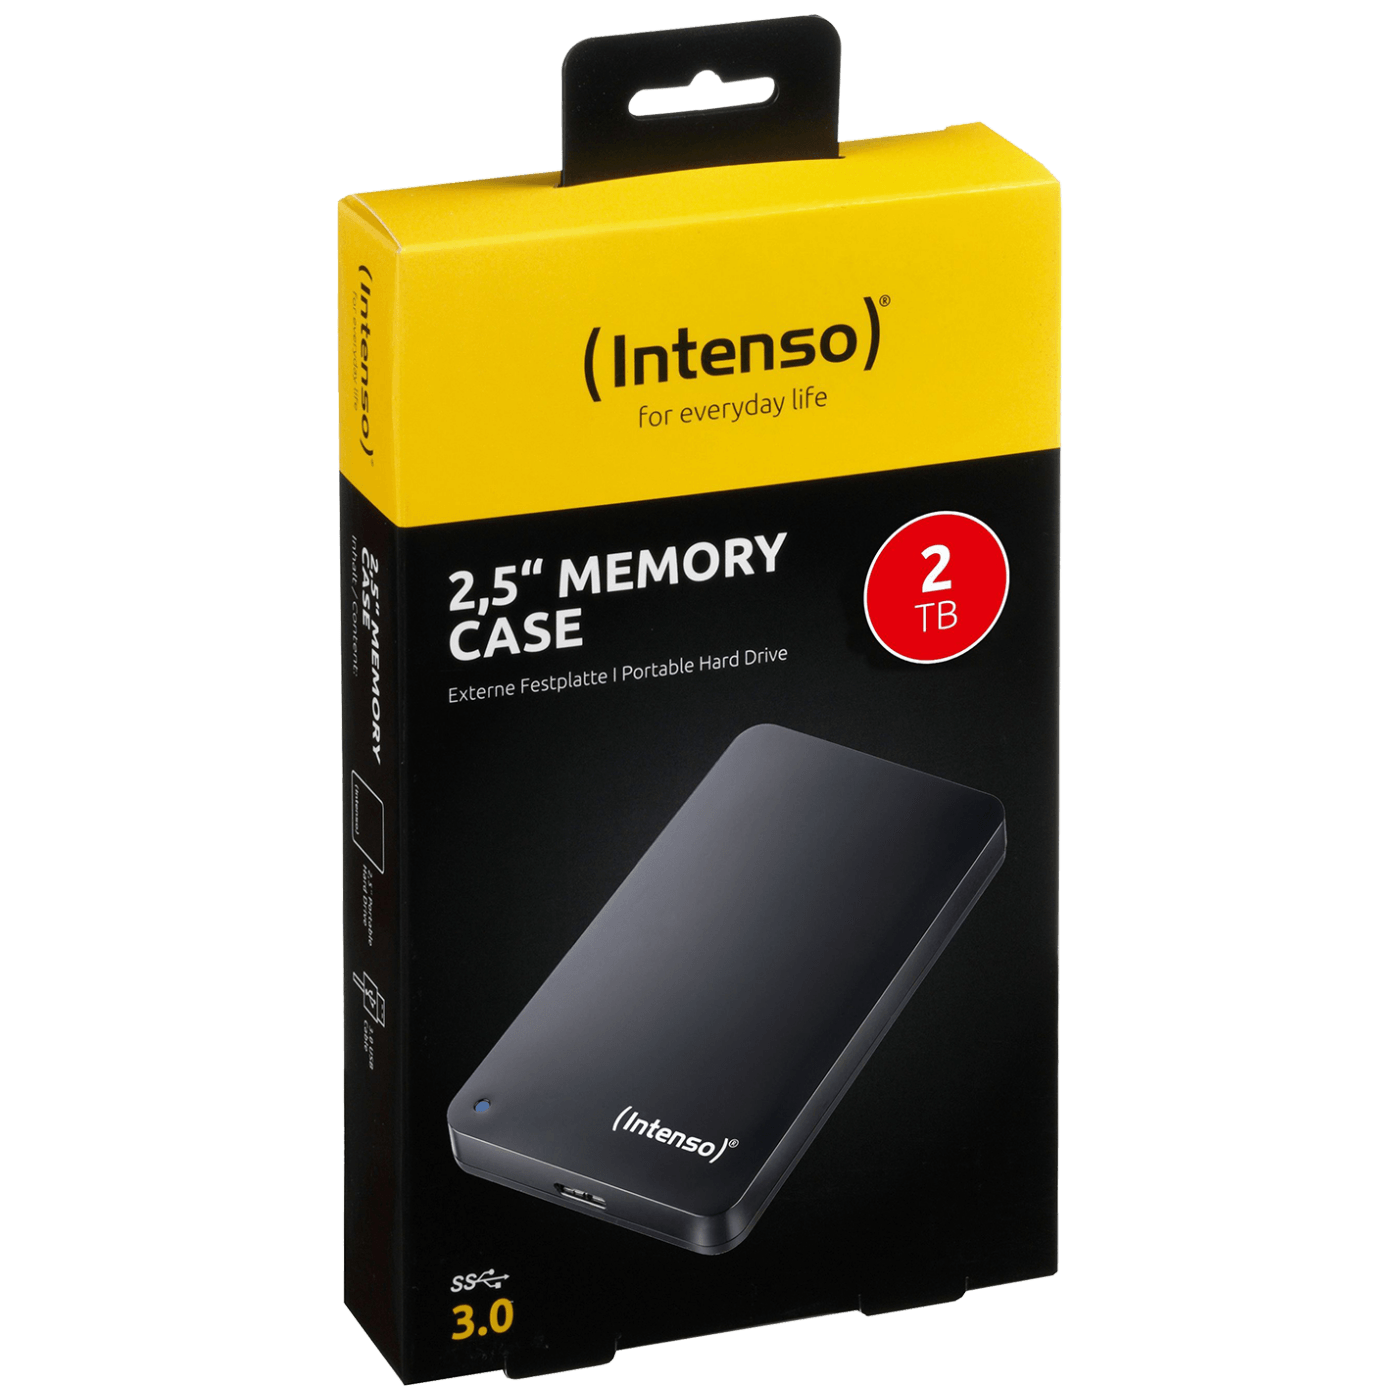 HDD3.0-2TB/Memory Case